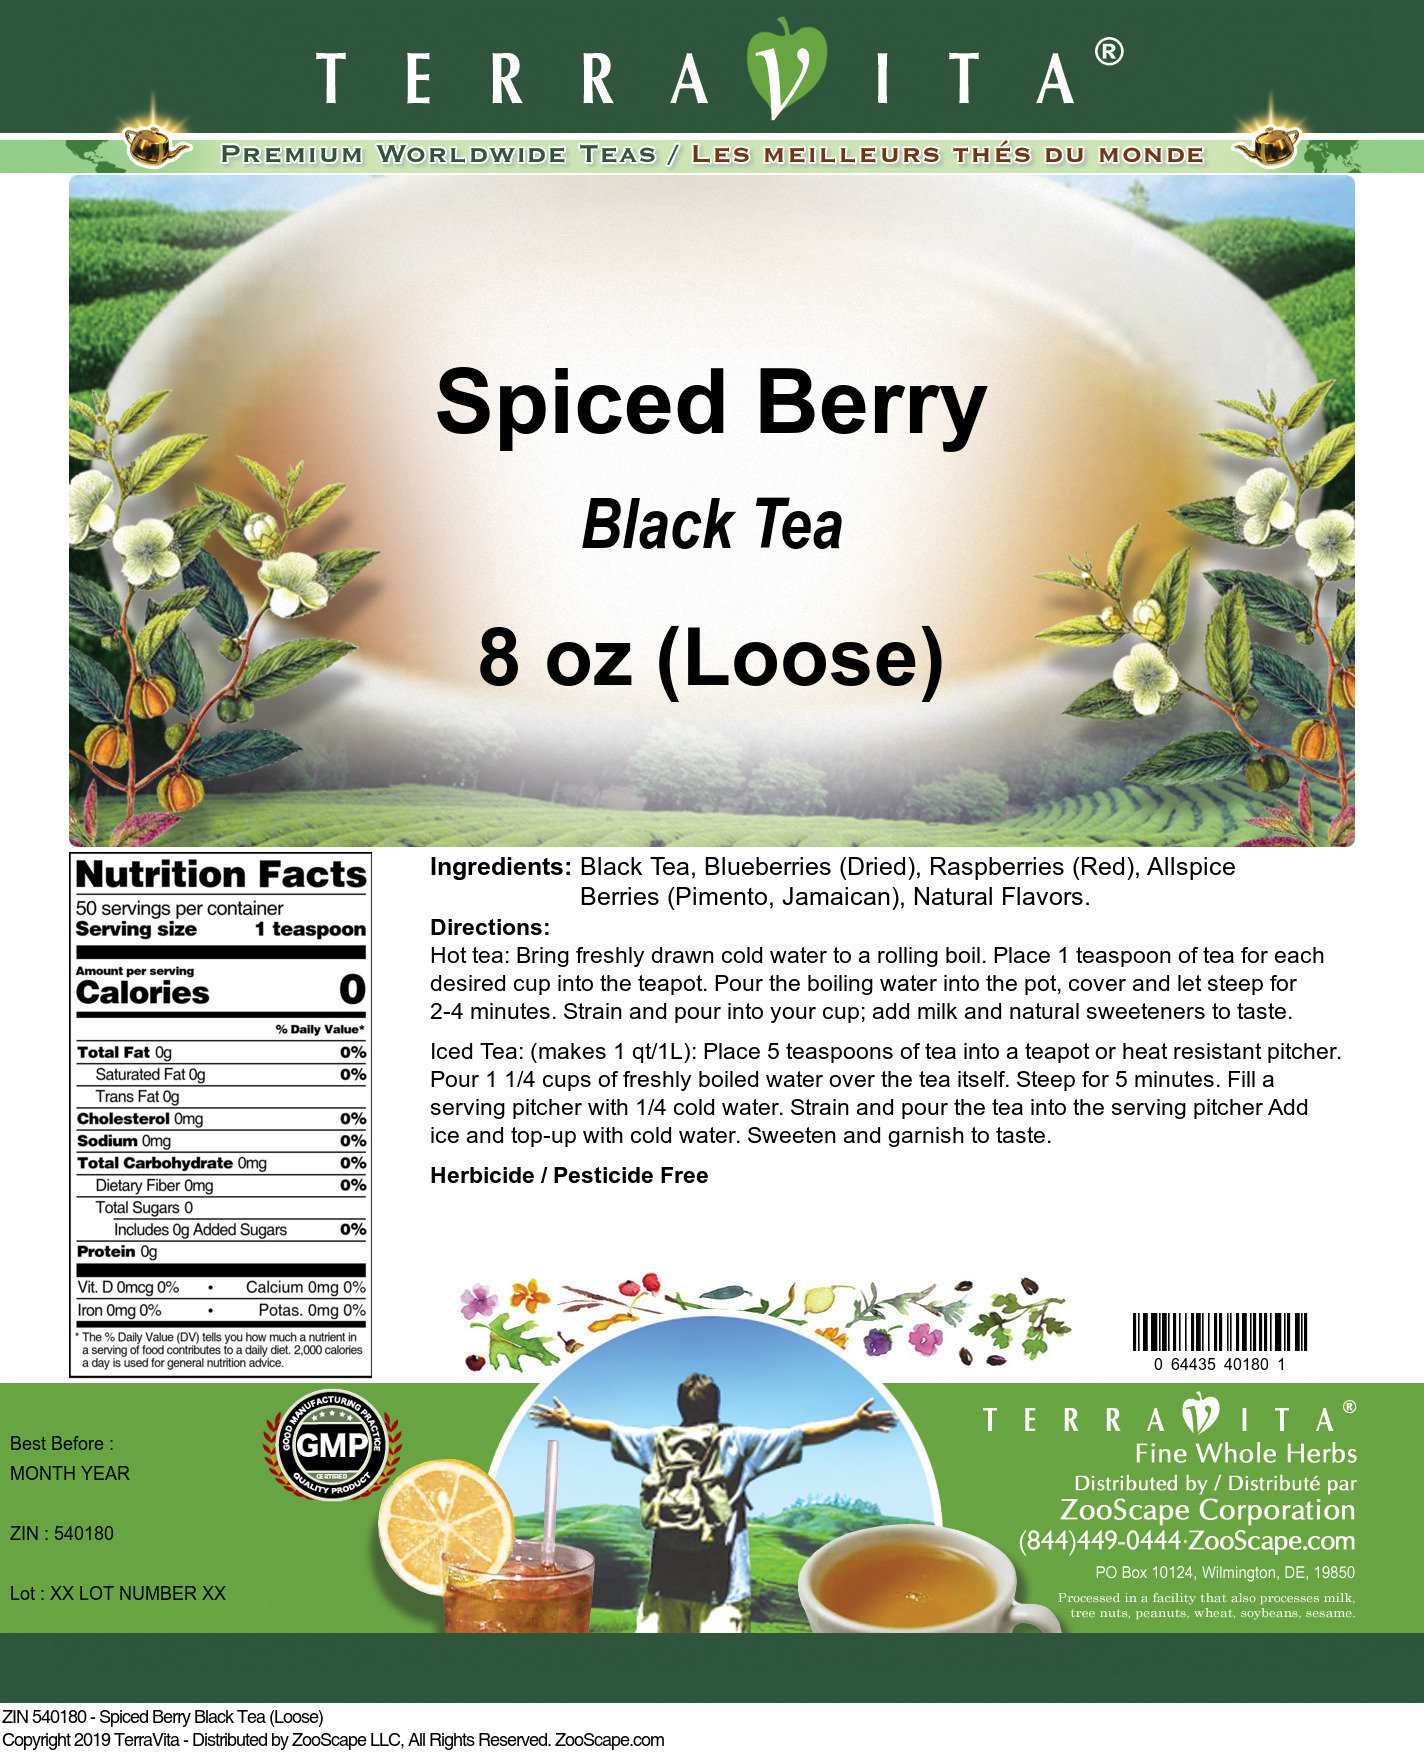 Spiced Berry Black Tea (Loose) - Label